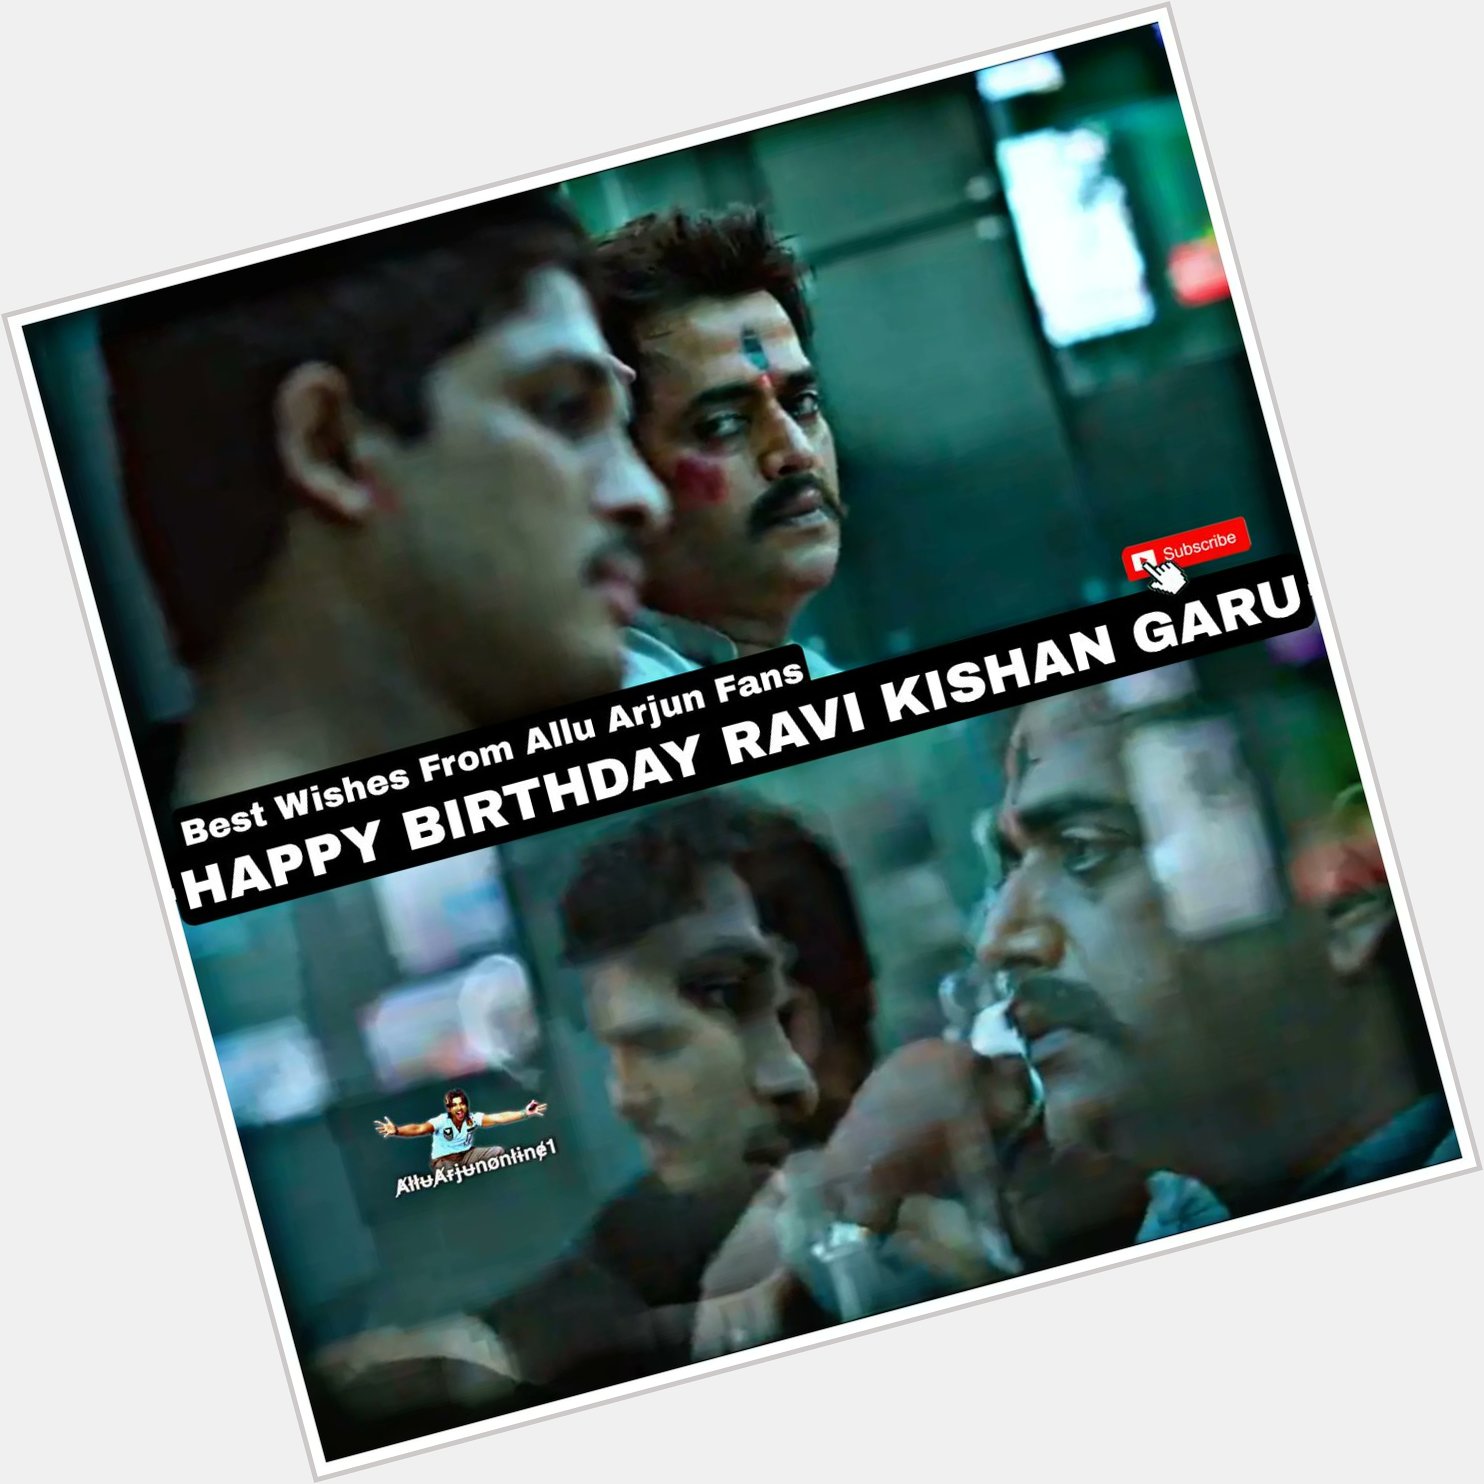 Happy Birthday Ravi Kishan Garu 
Best wishes from Alluarjun fans   